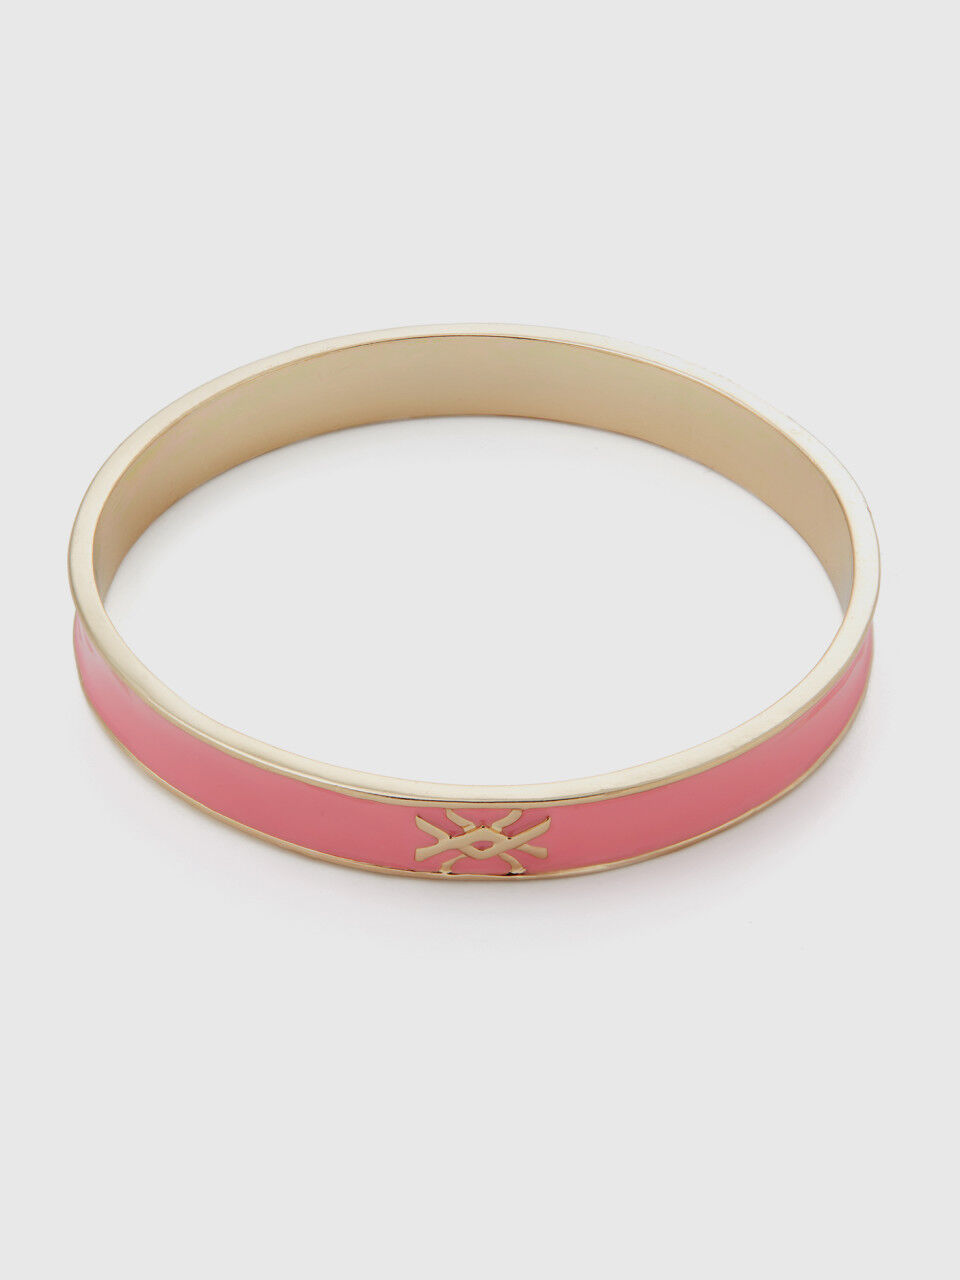 Pink bangle bracelet with logo